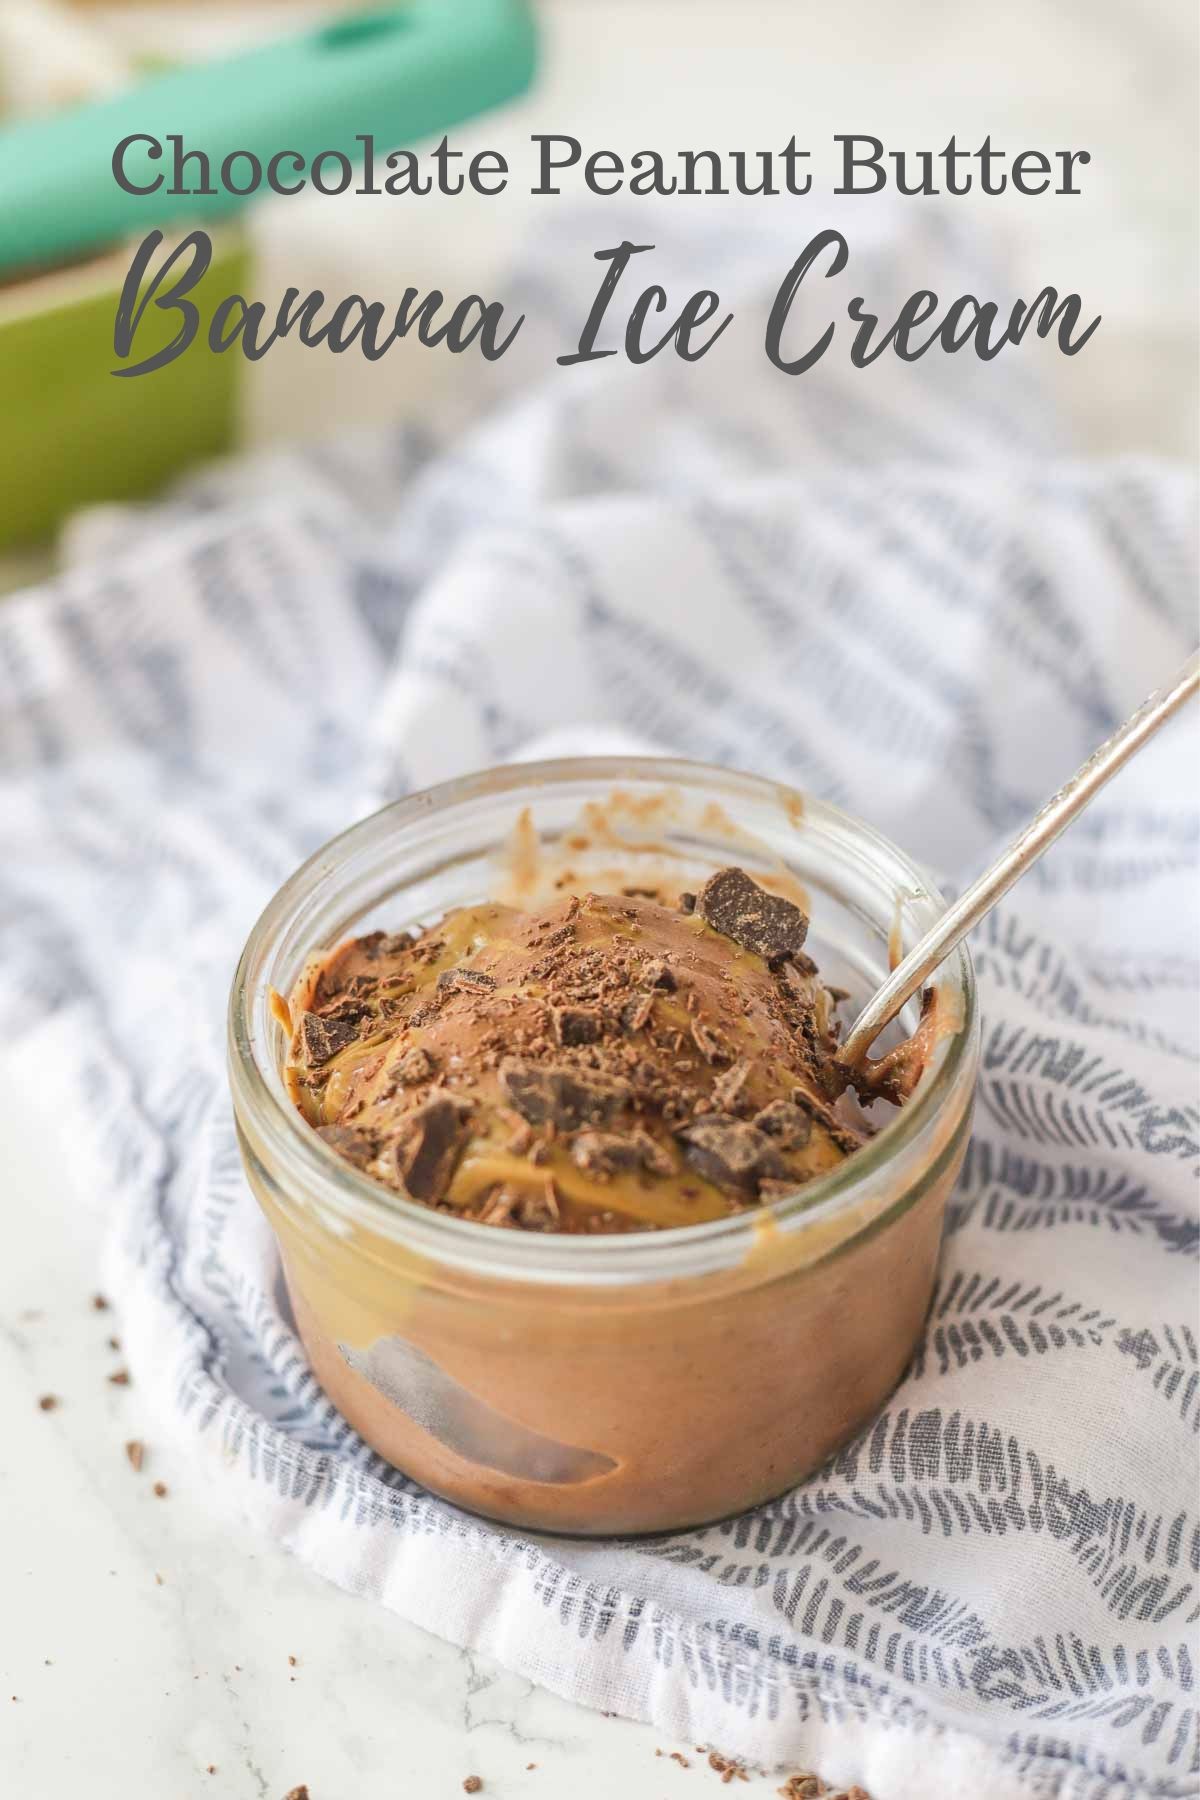 Chocolate Peanut Butter Banana “Ice Cream”